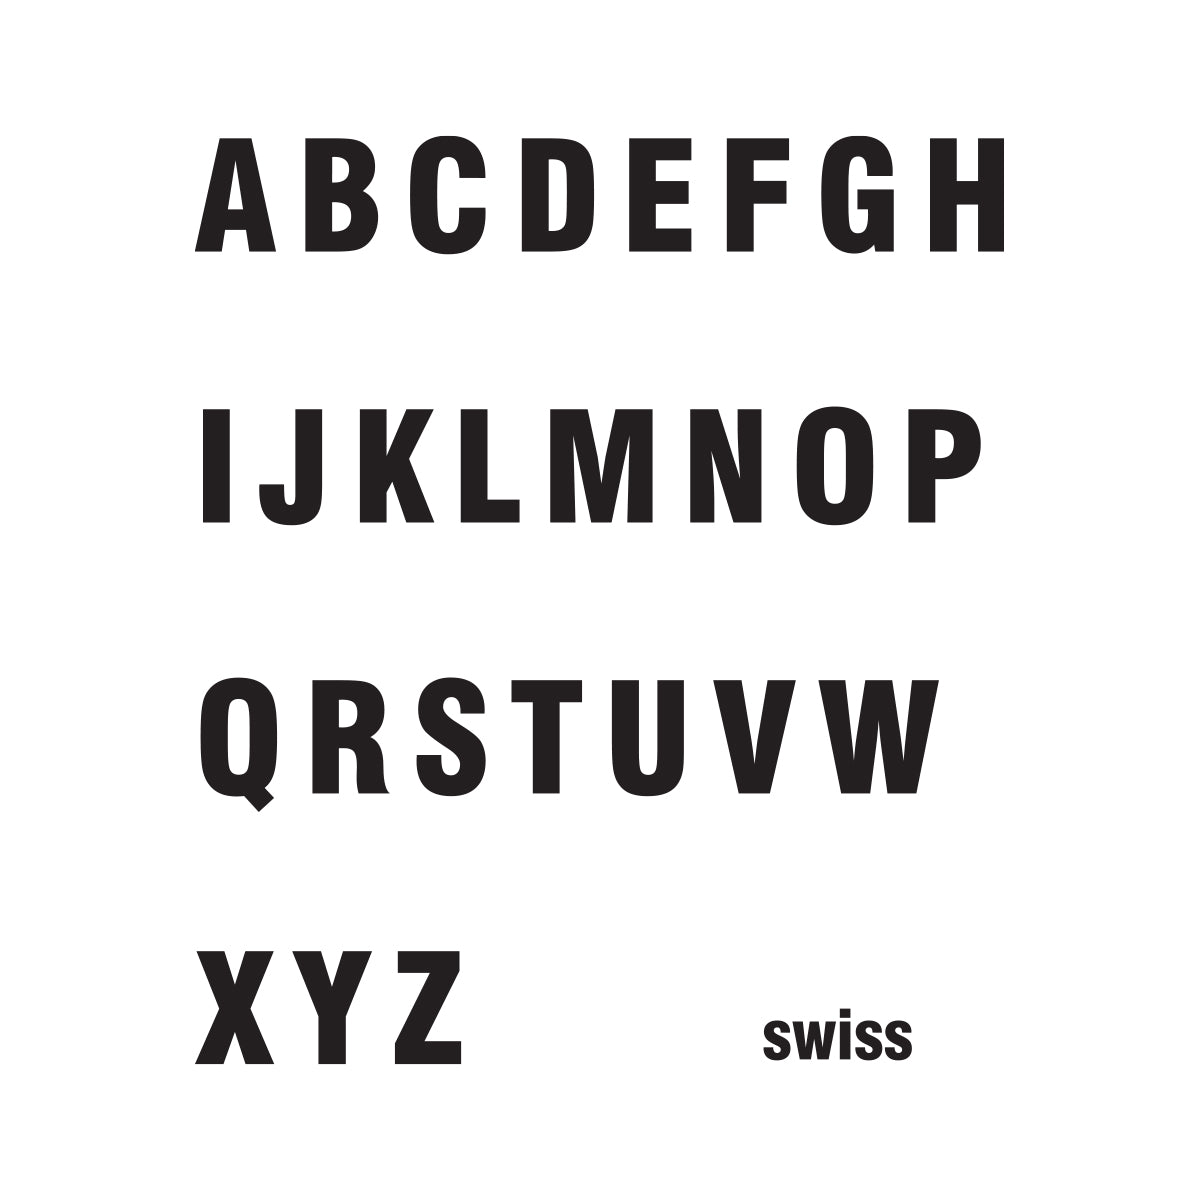 Swiss Written Number-1 Line.